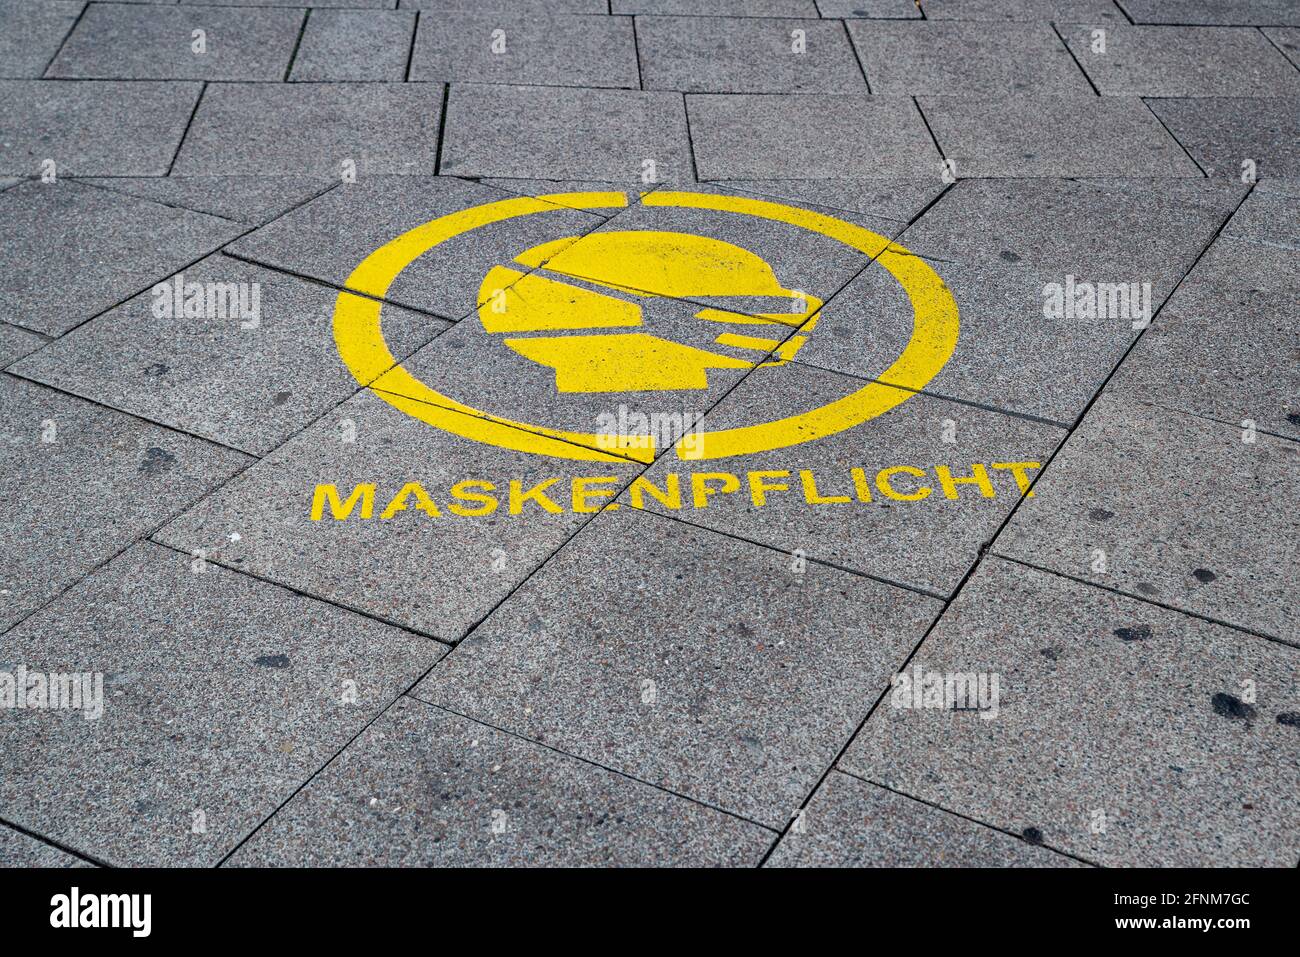 Yellow road marking Maskenpflicht Stock Photo